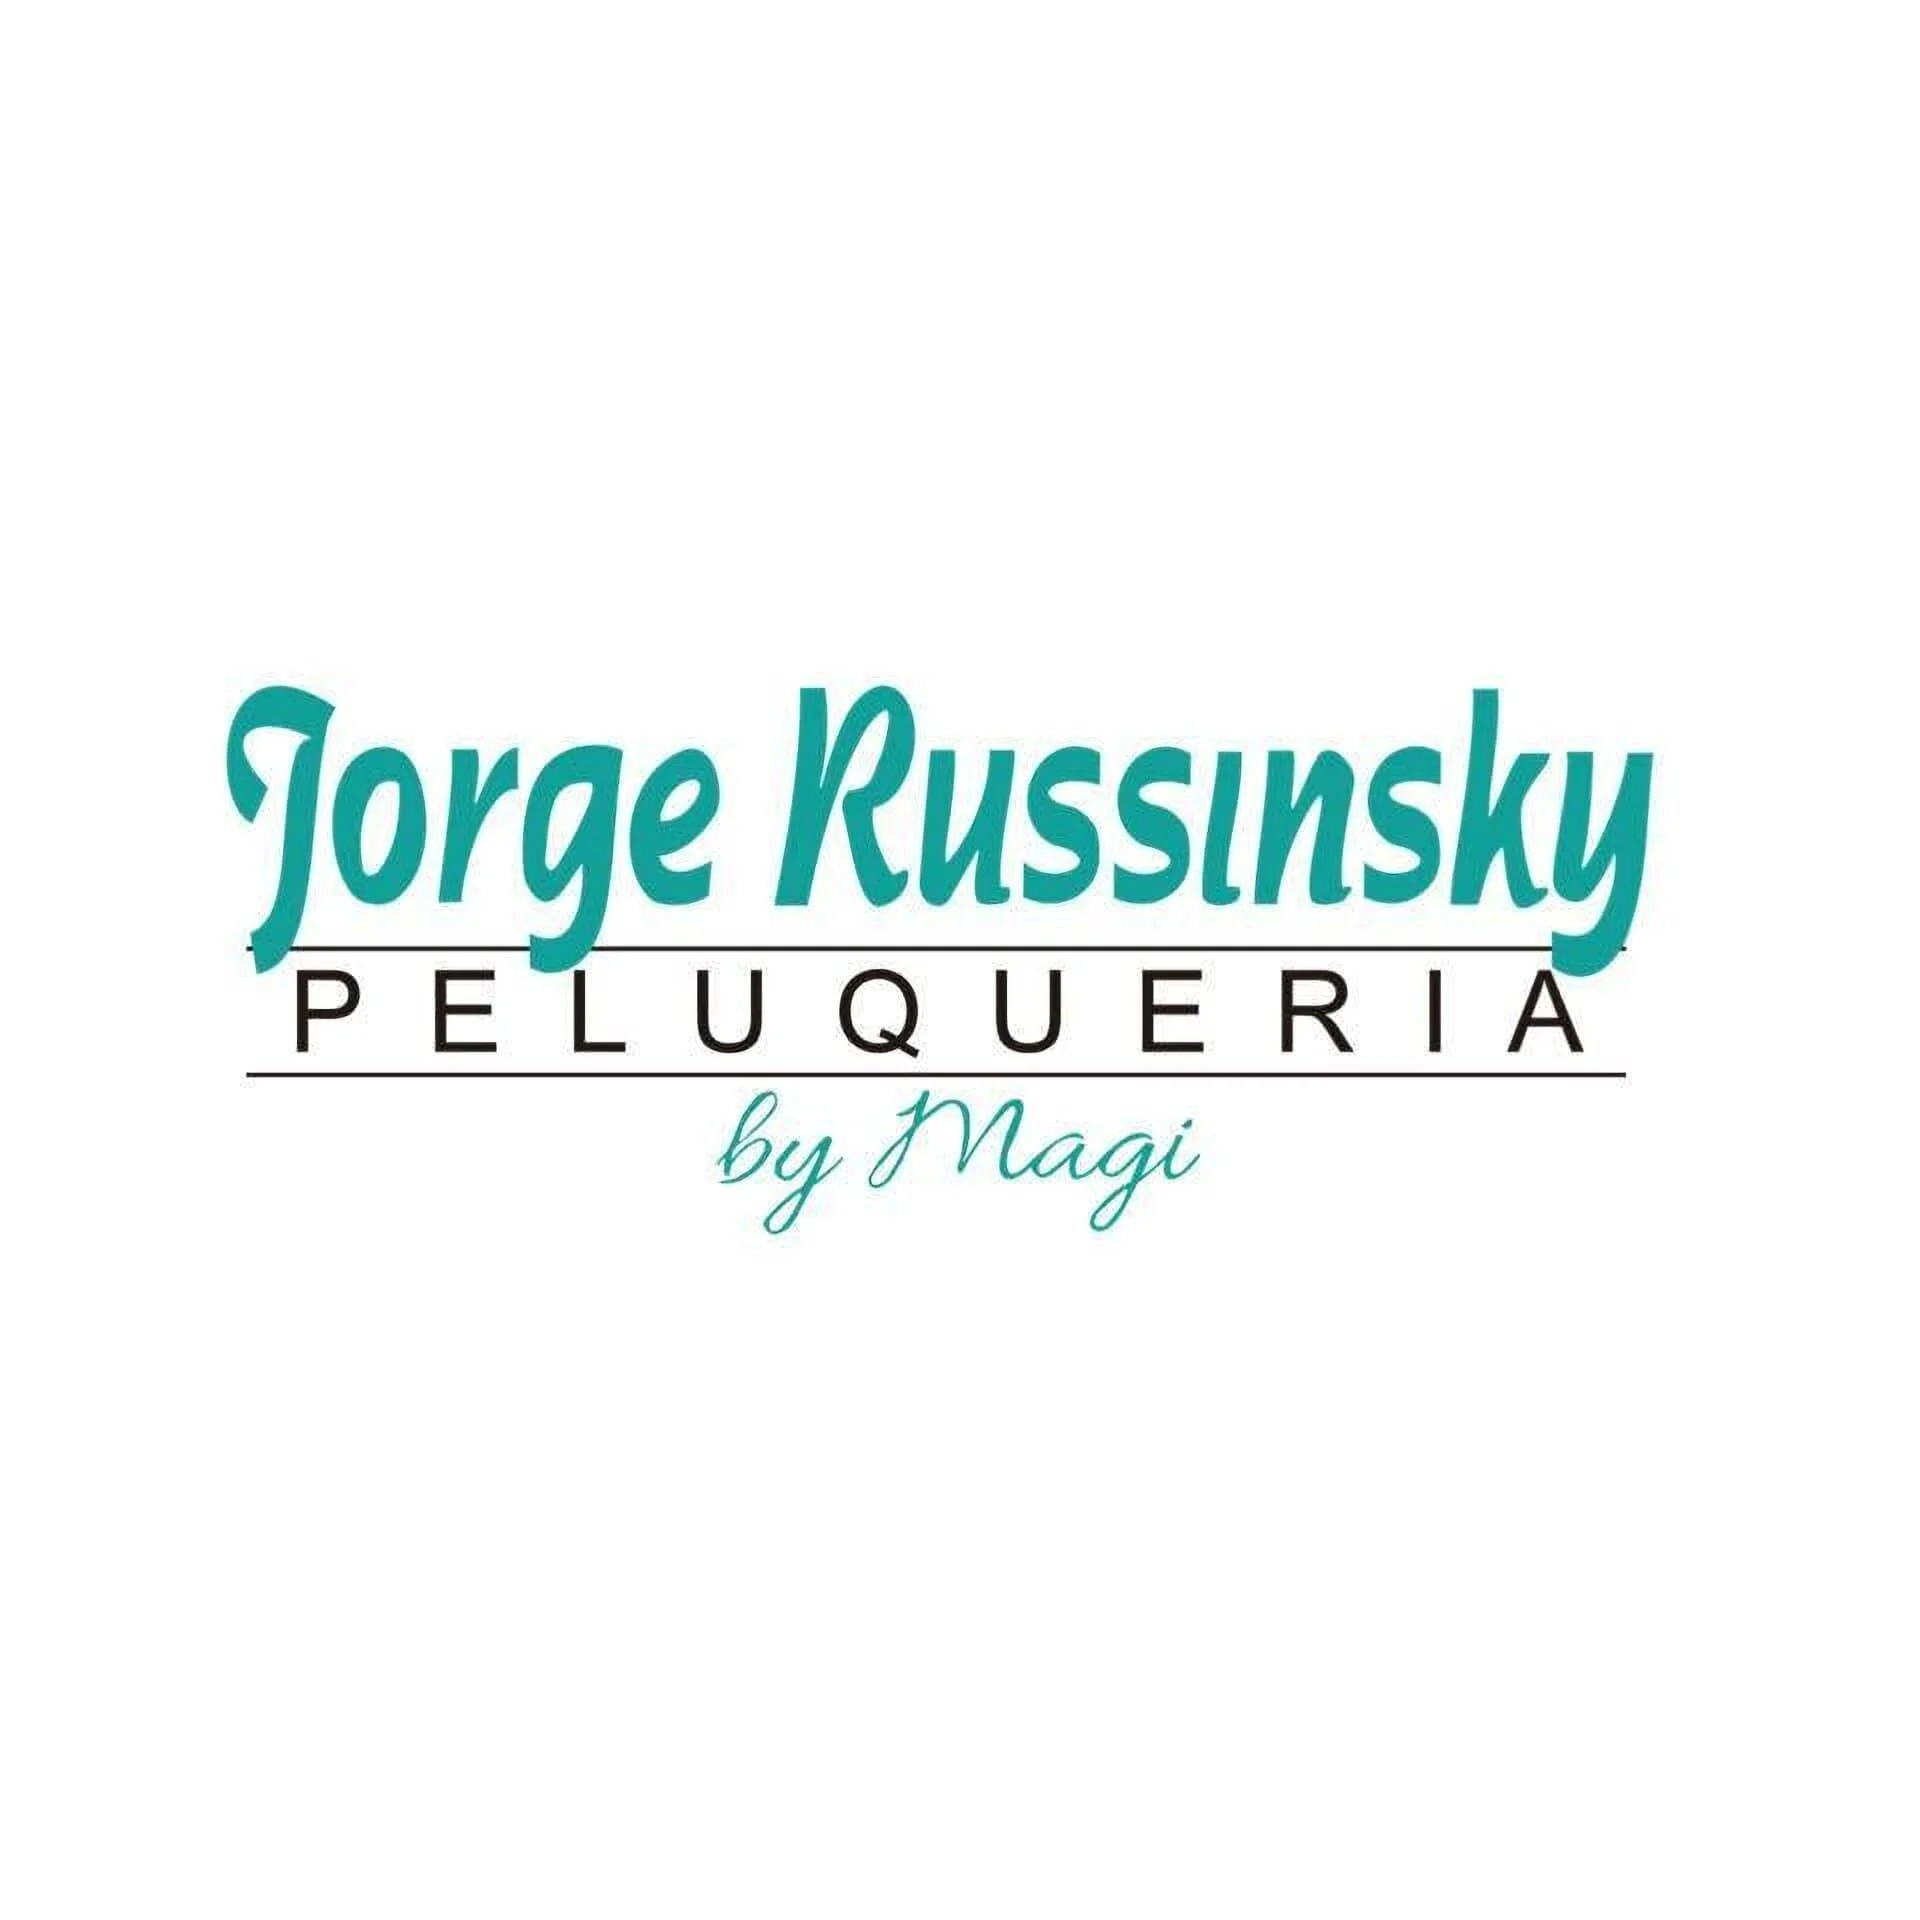 Jorge Russinsky" Peluqueria y cosmetologia"by Magi-2197